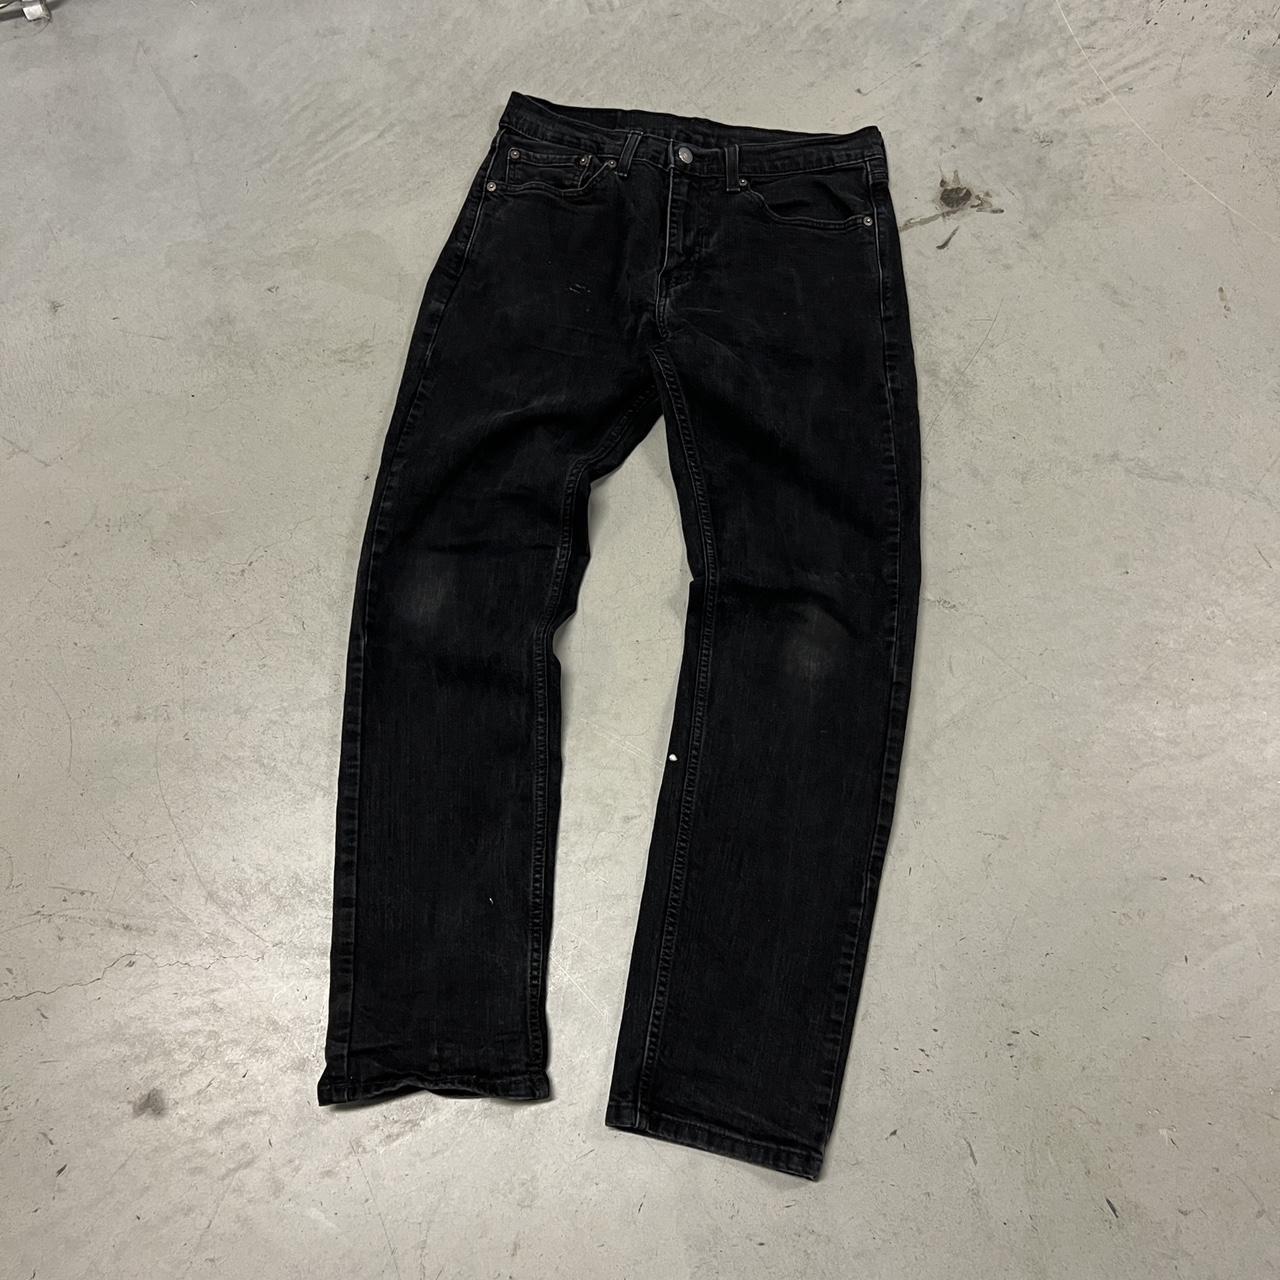 Vintage Faded Black Jeans 32x32 -About Uglycore - A... - Depop